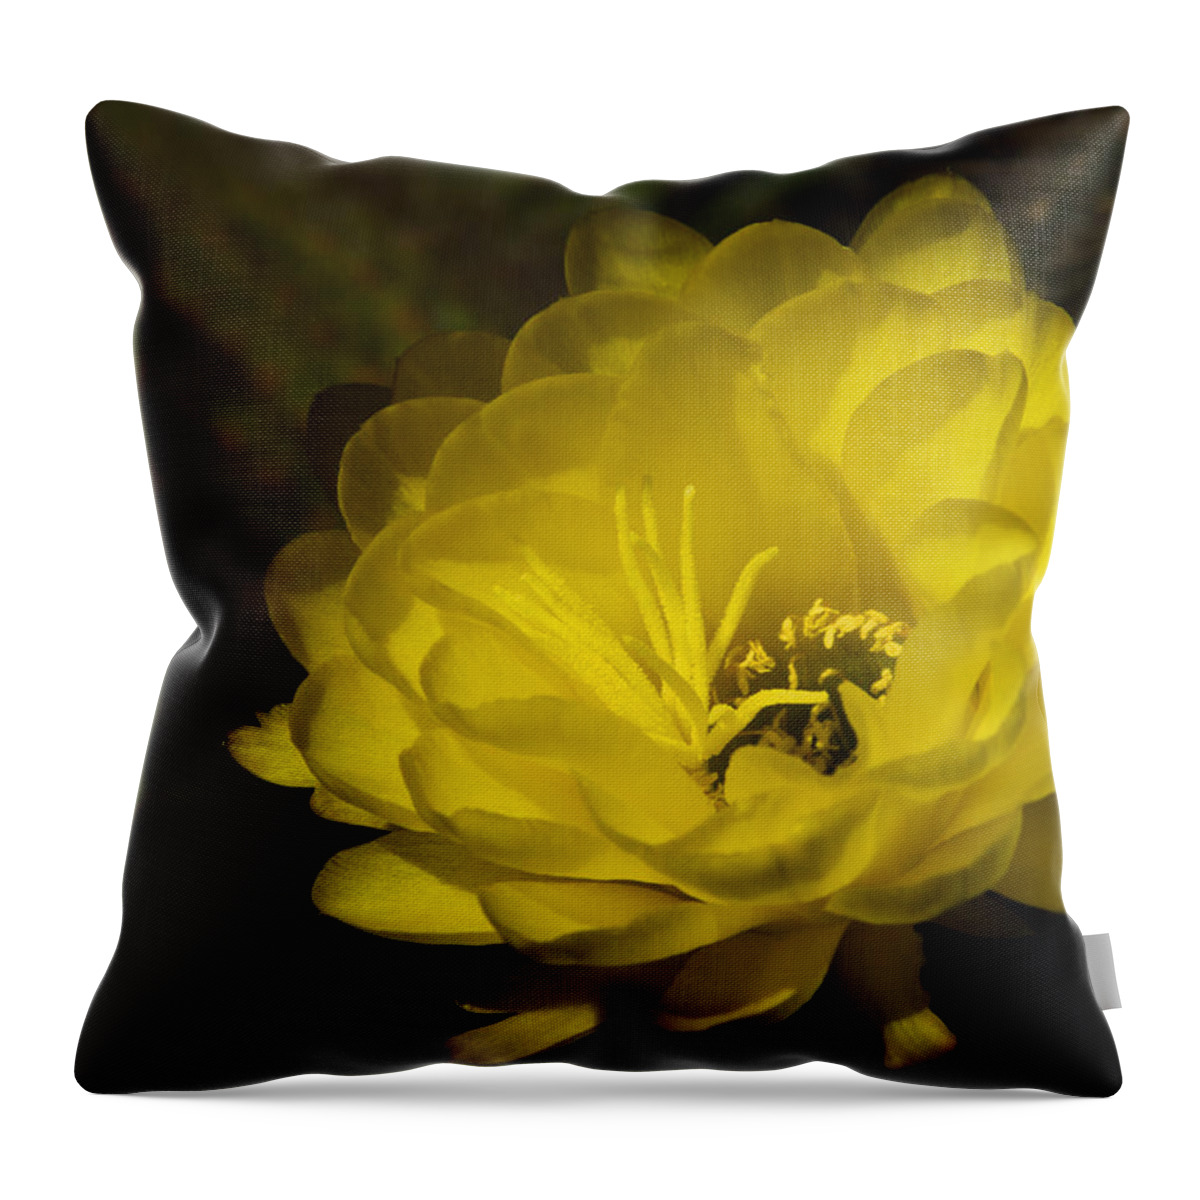 Yellow Cactus Flower Throw Pillow featuring the photograph Just Call Me Mellow Yellow by Saija Lehtonen